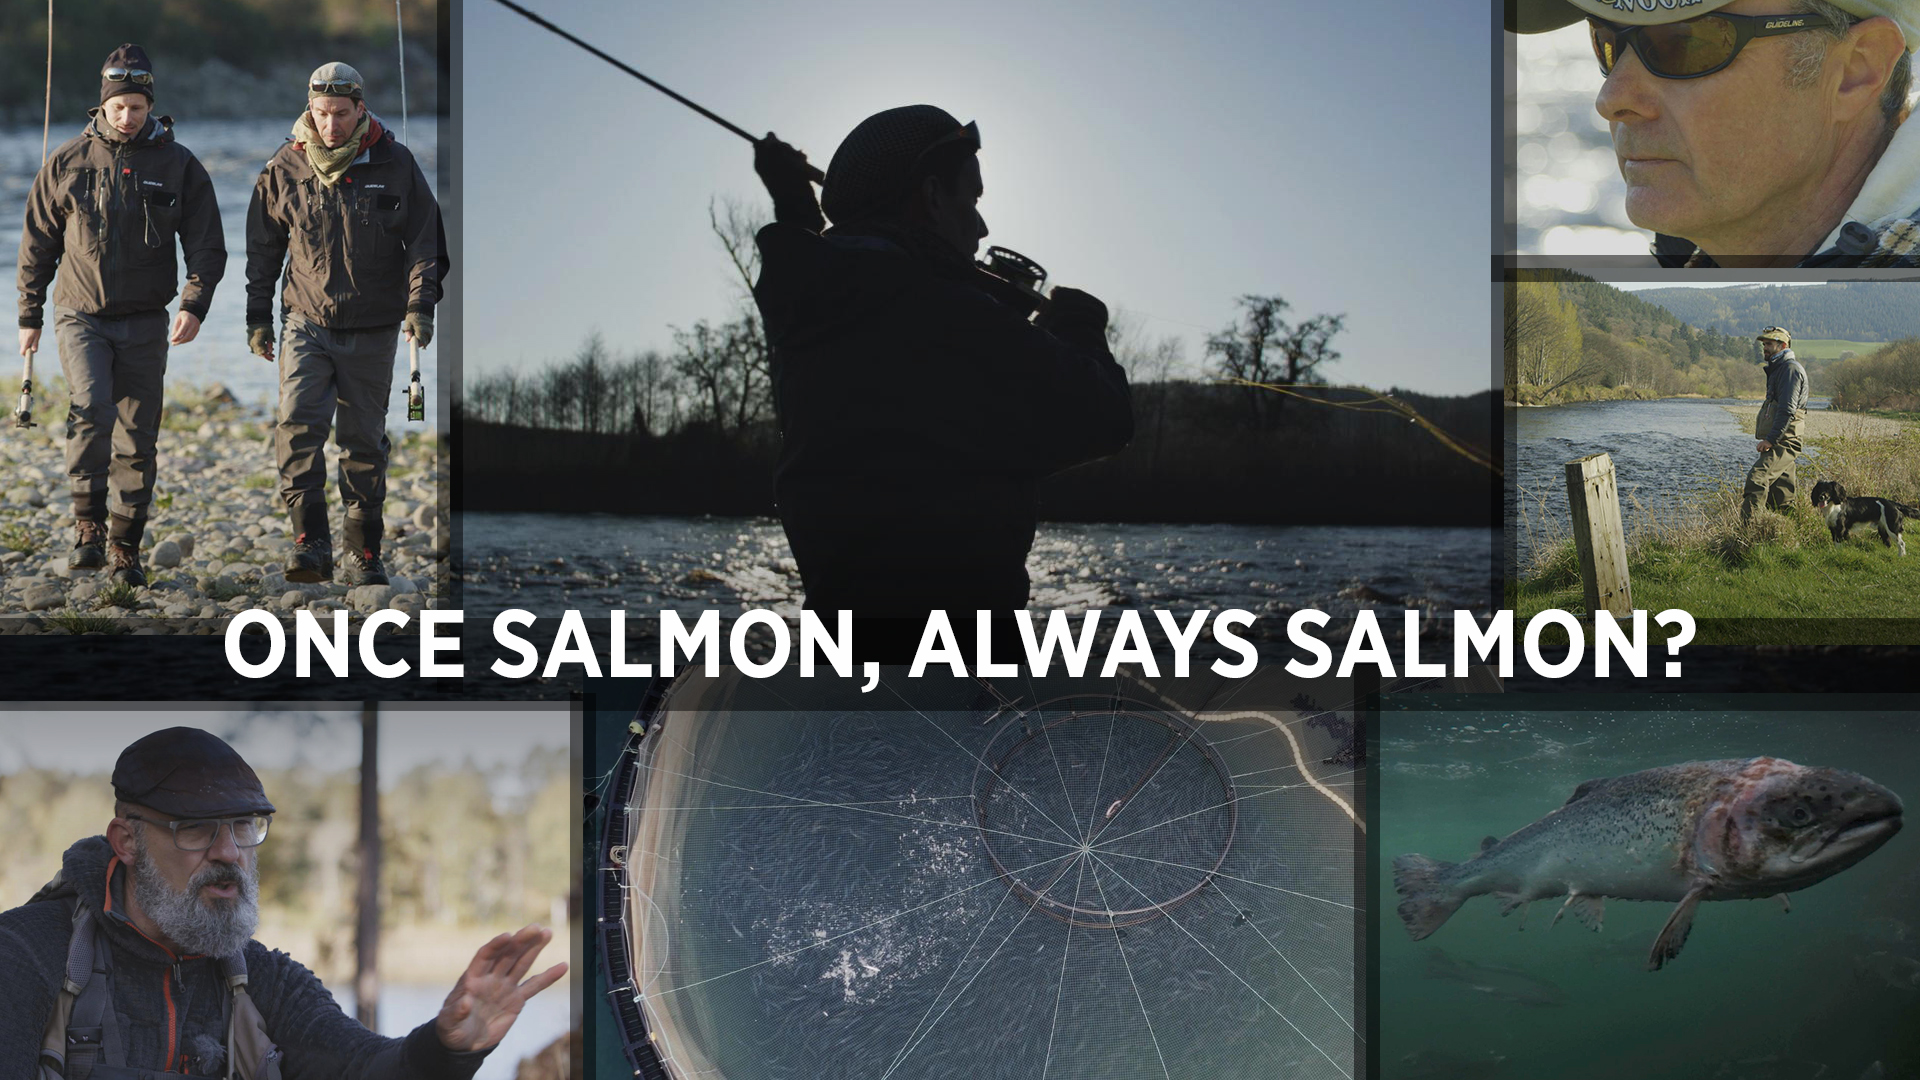 Once salmon, always salmon?